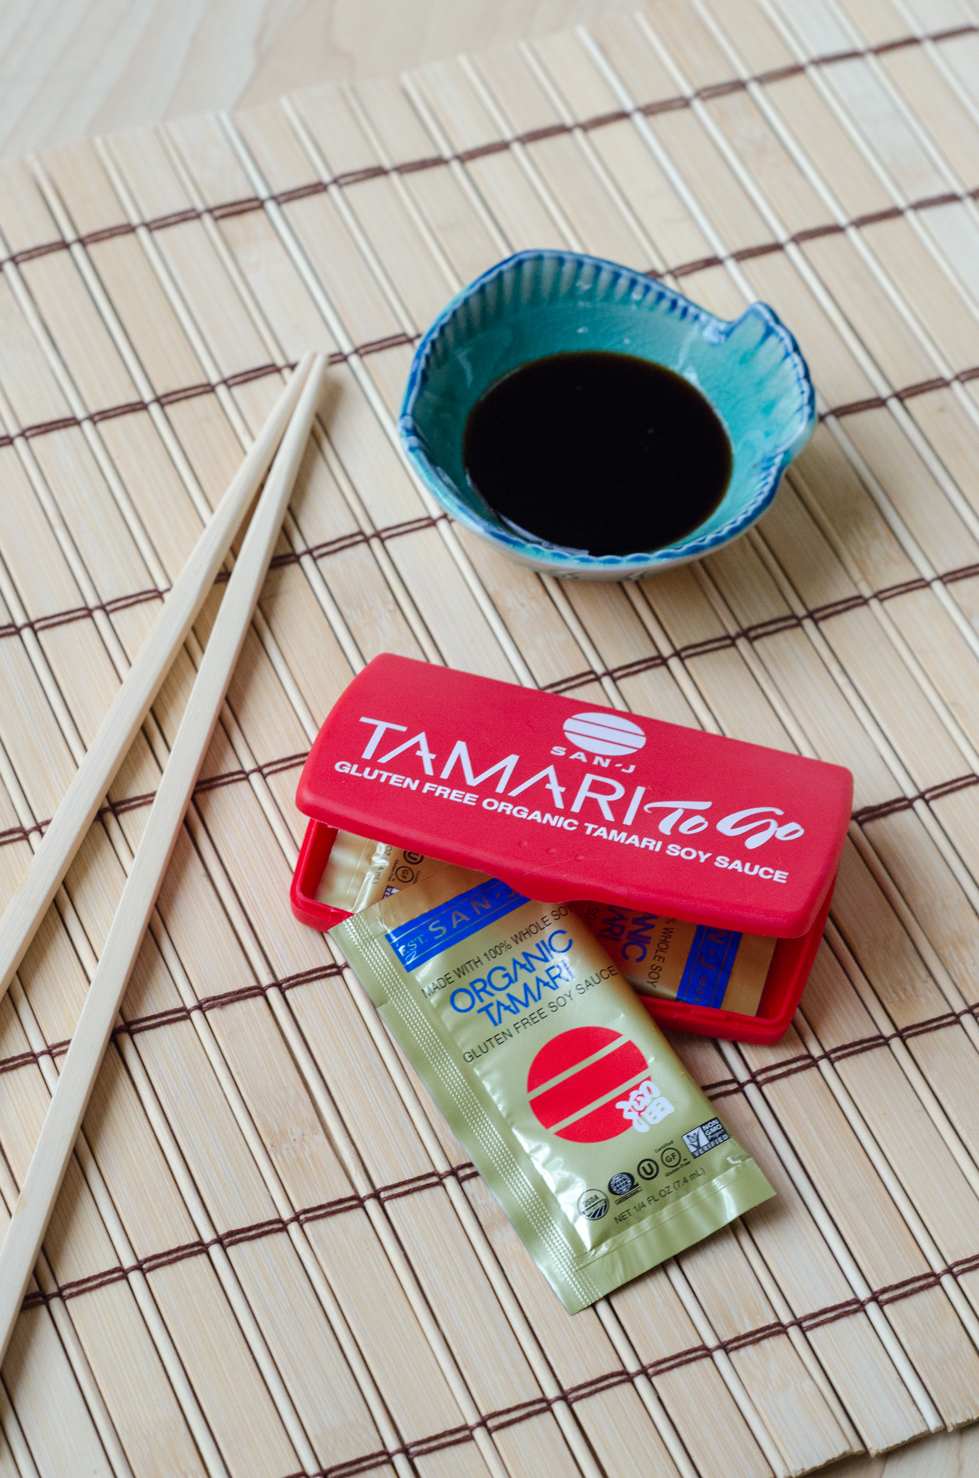 San-J Tamari Soy Sauce packets